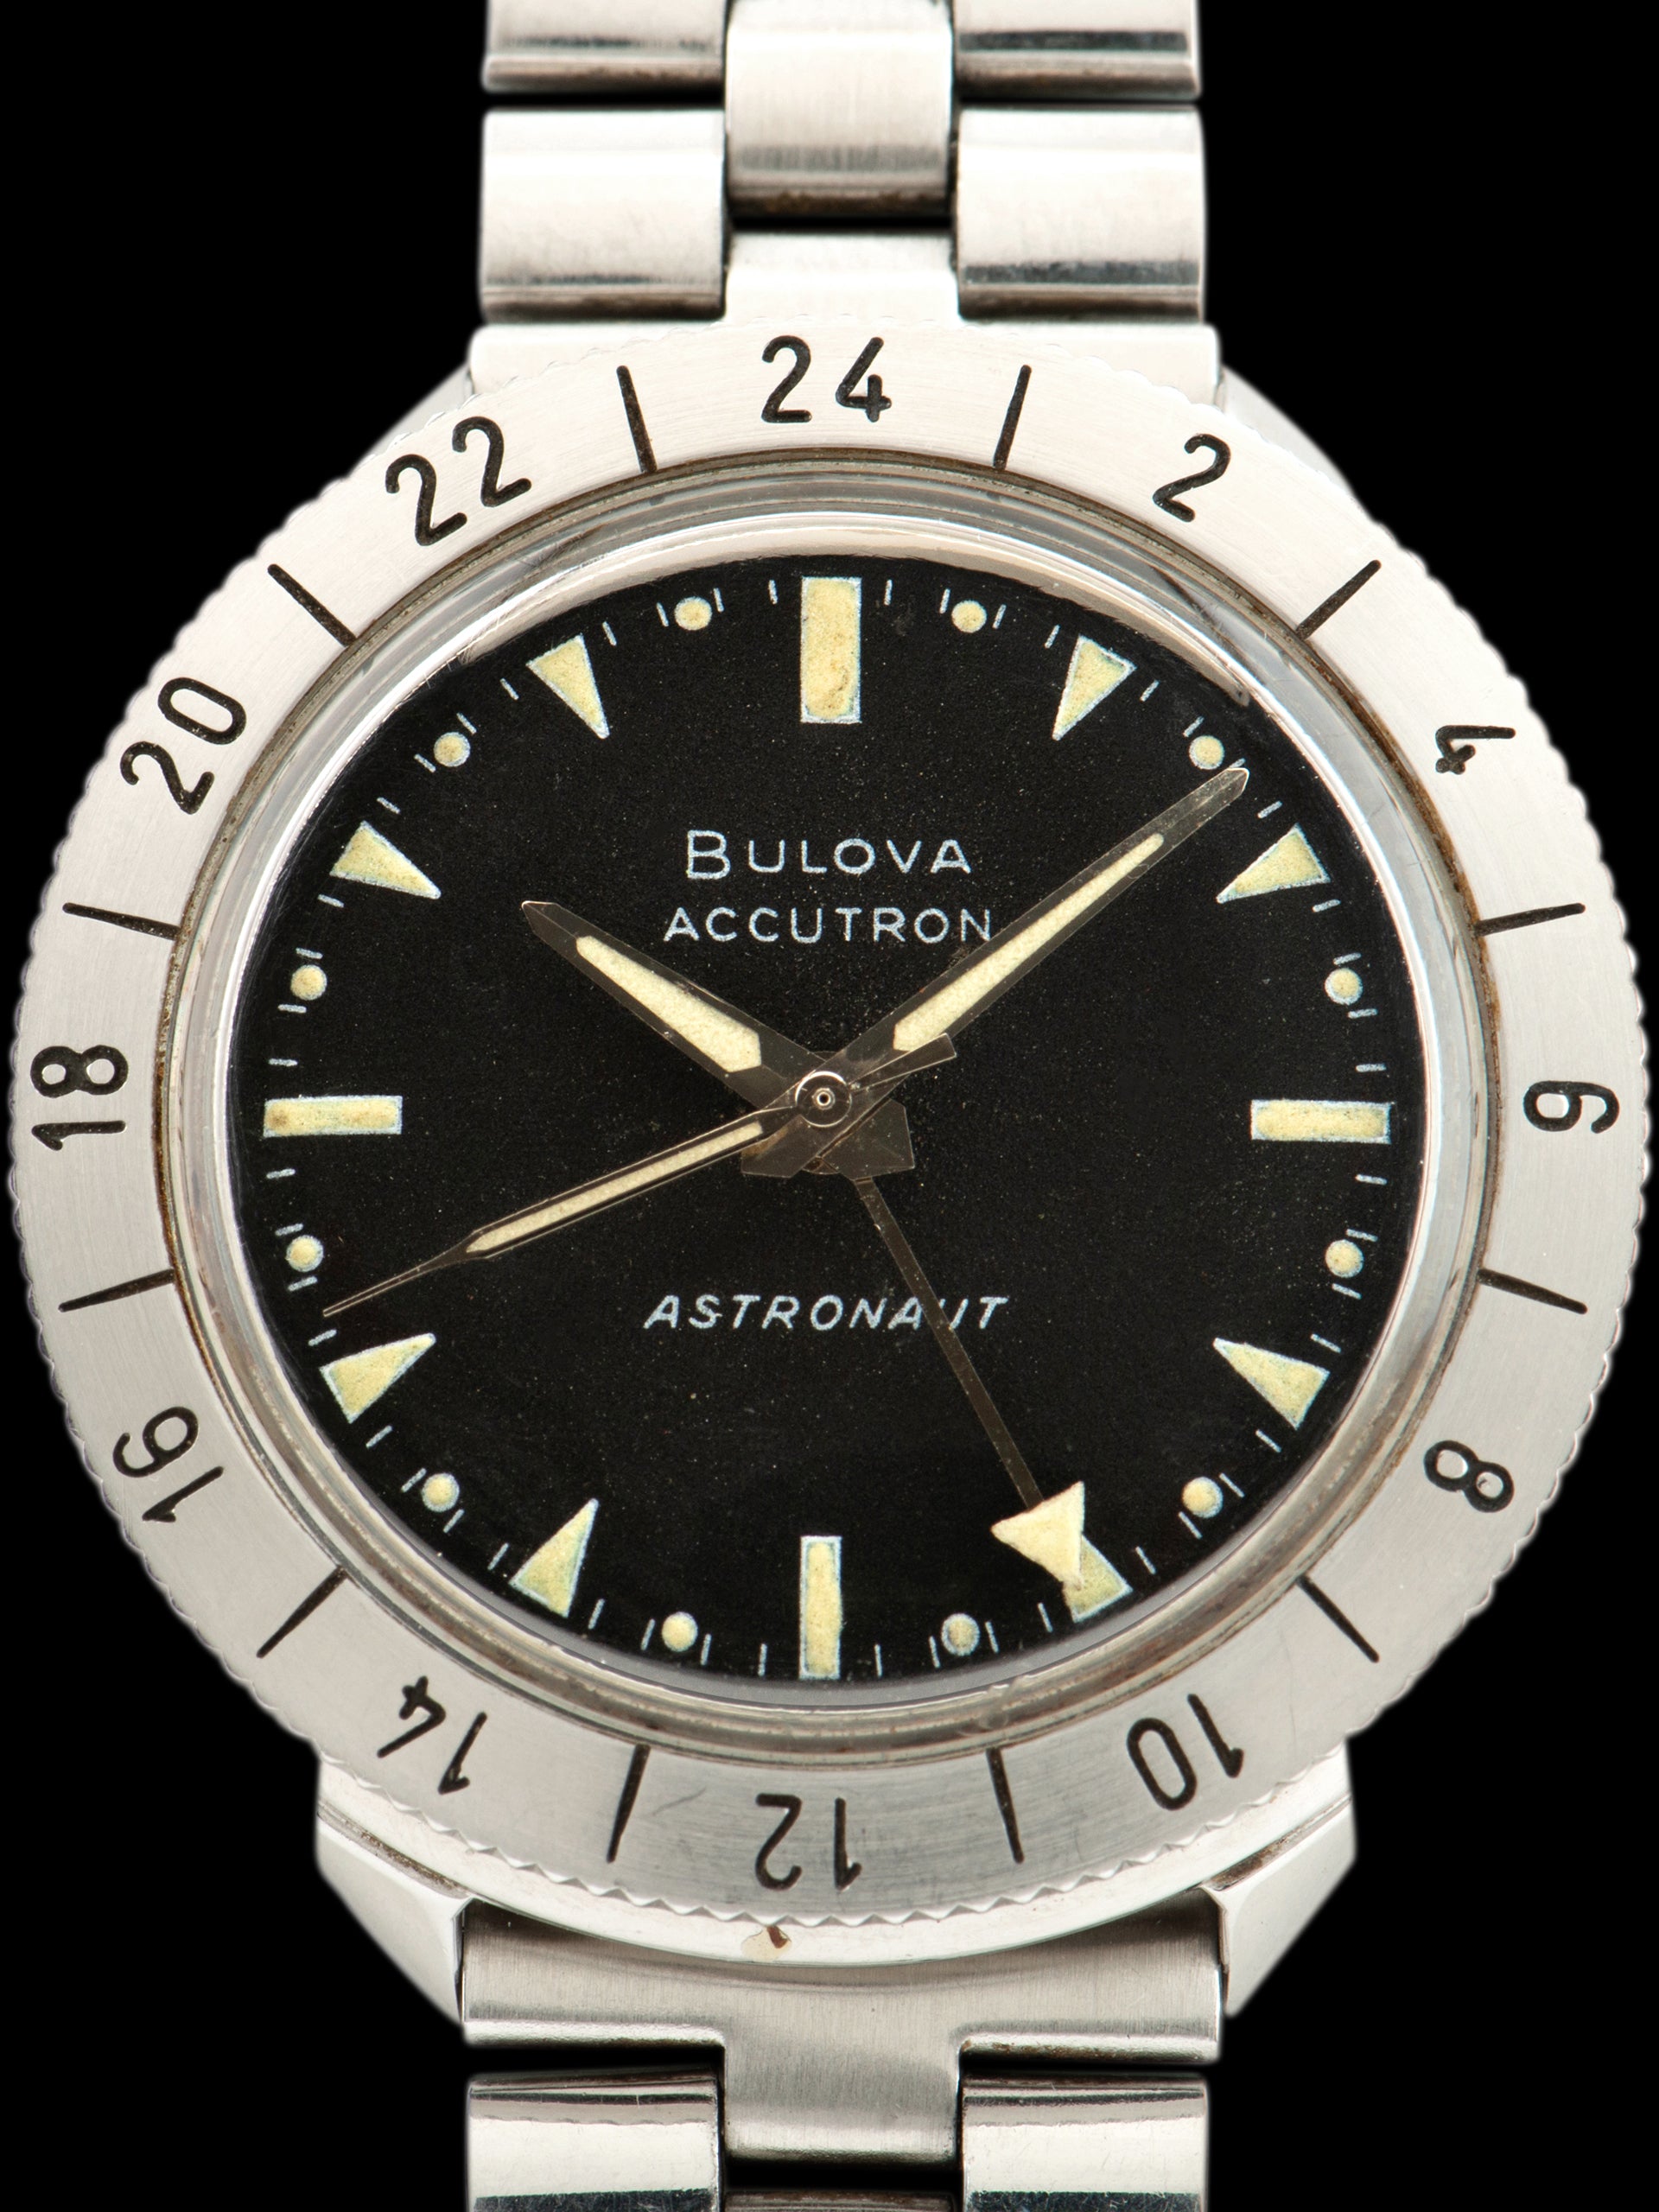 1969 Bulova Accutron Astronaut GMT